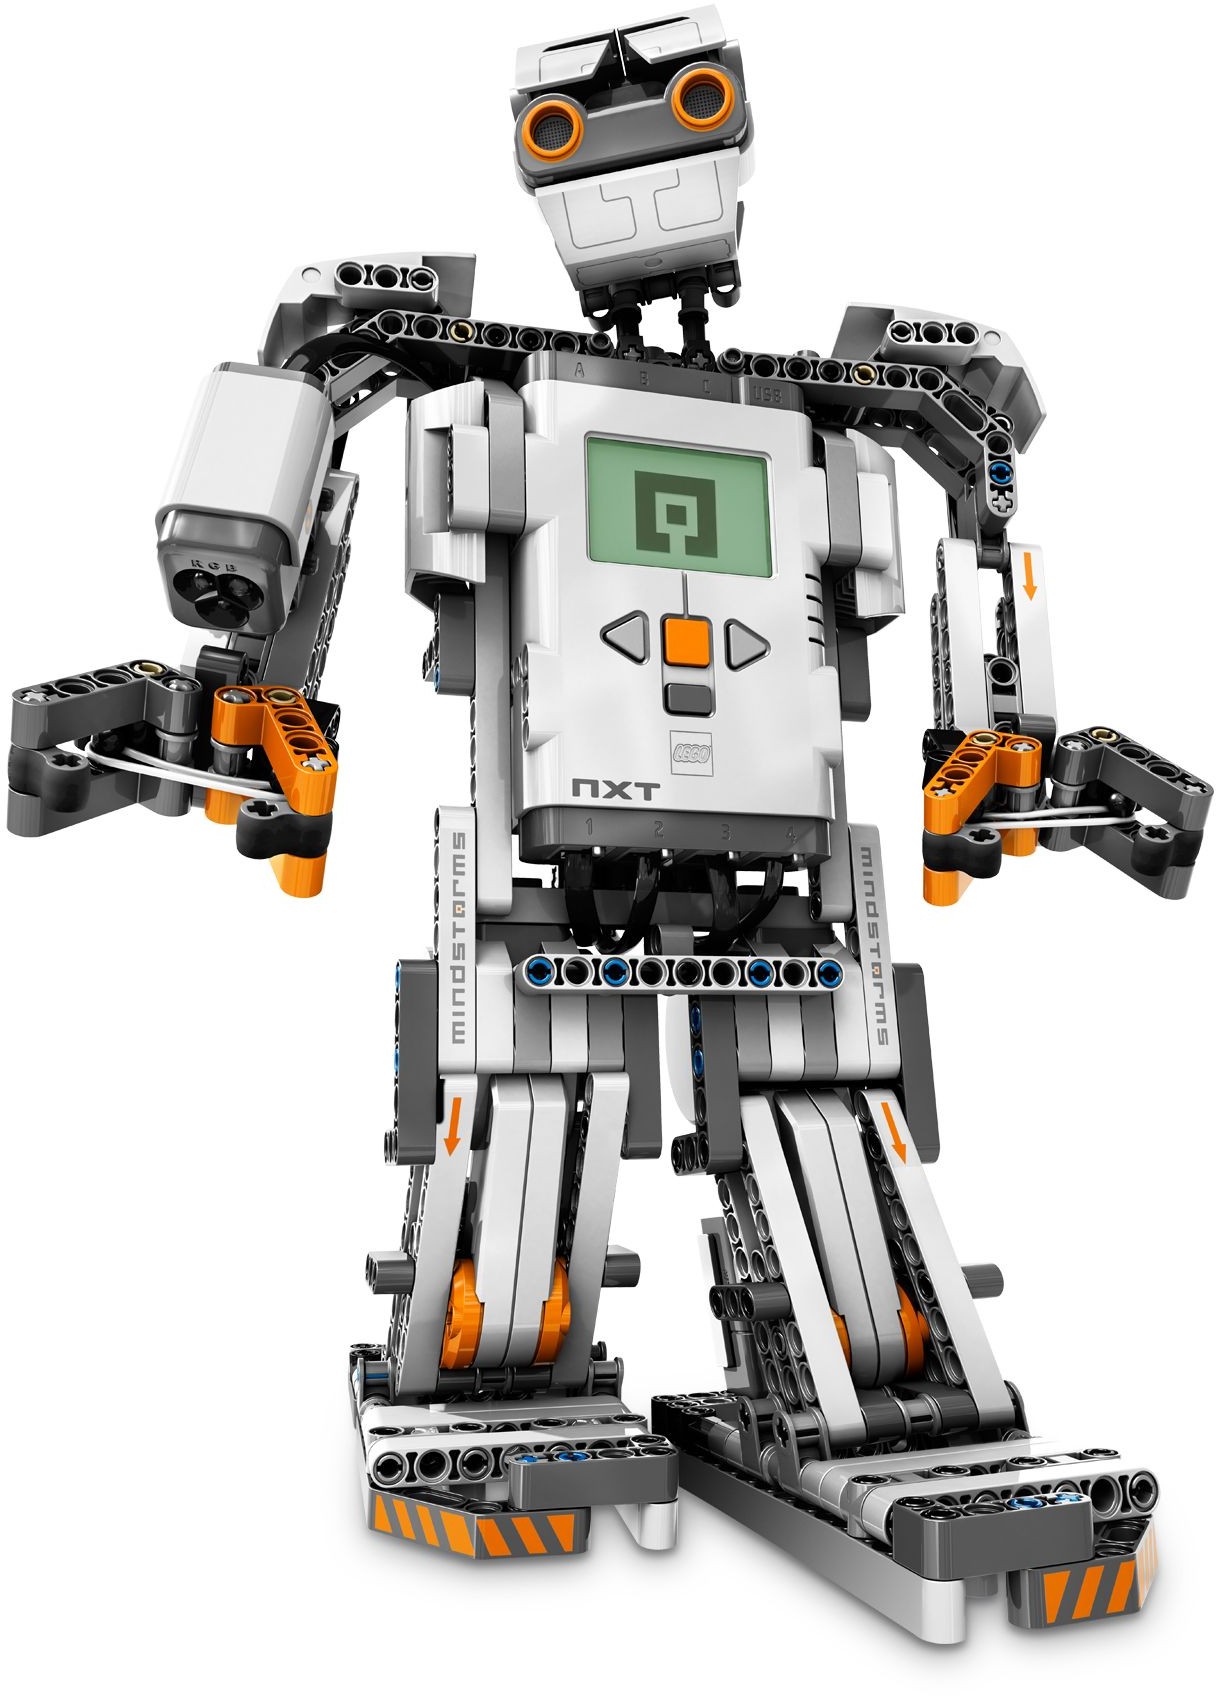 Lego Electric Mindstorms NXT Ultrasonic Sensor Set # 9846-1 